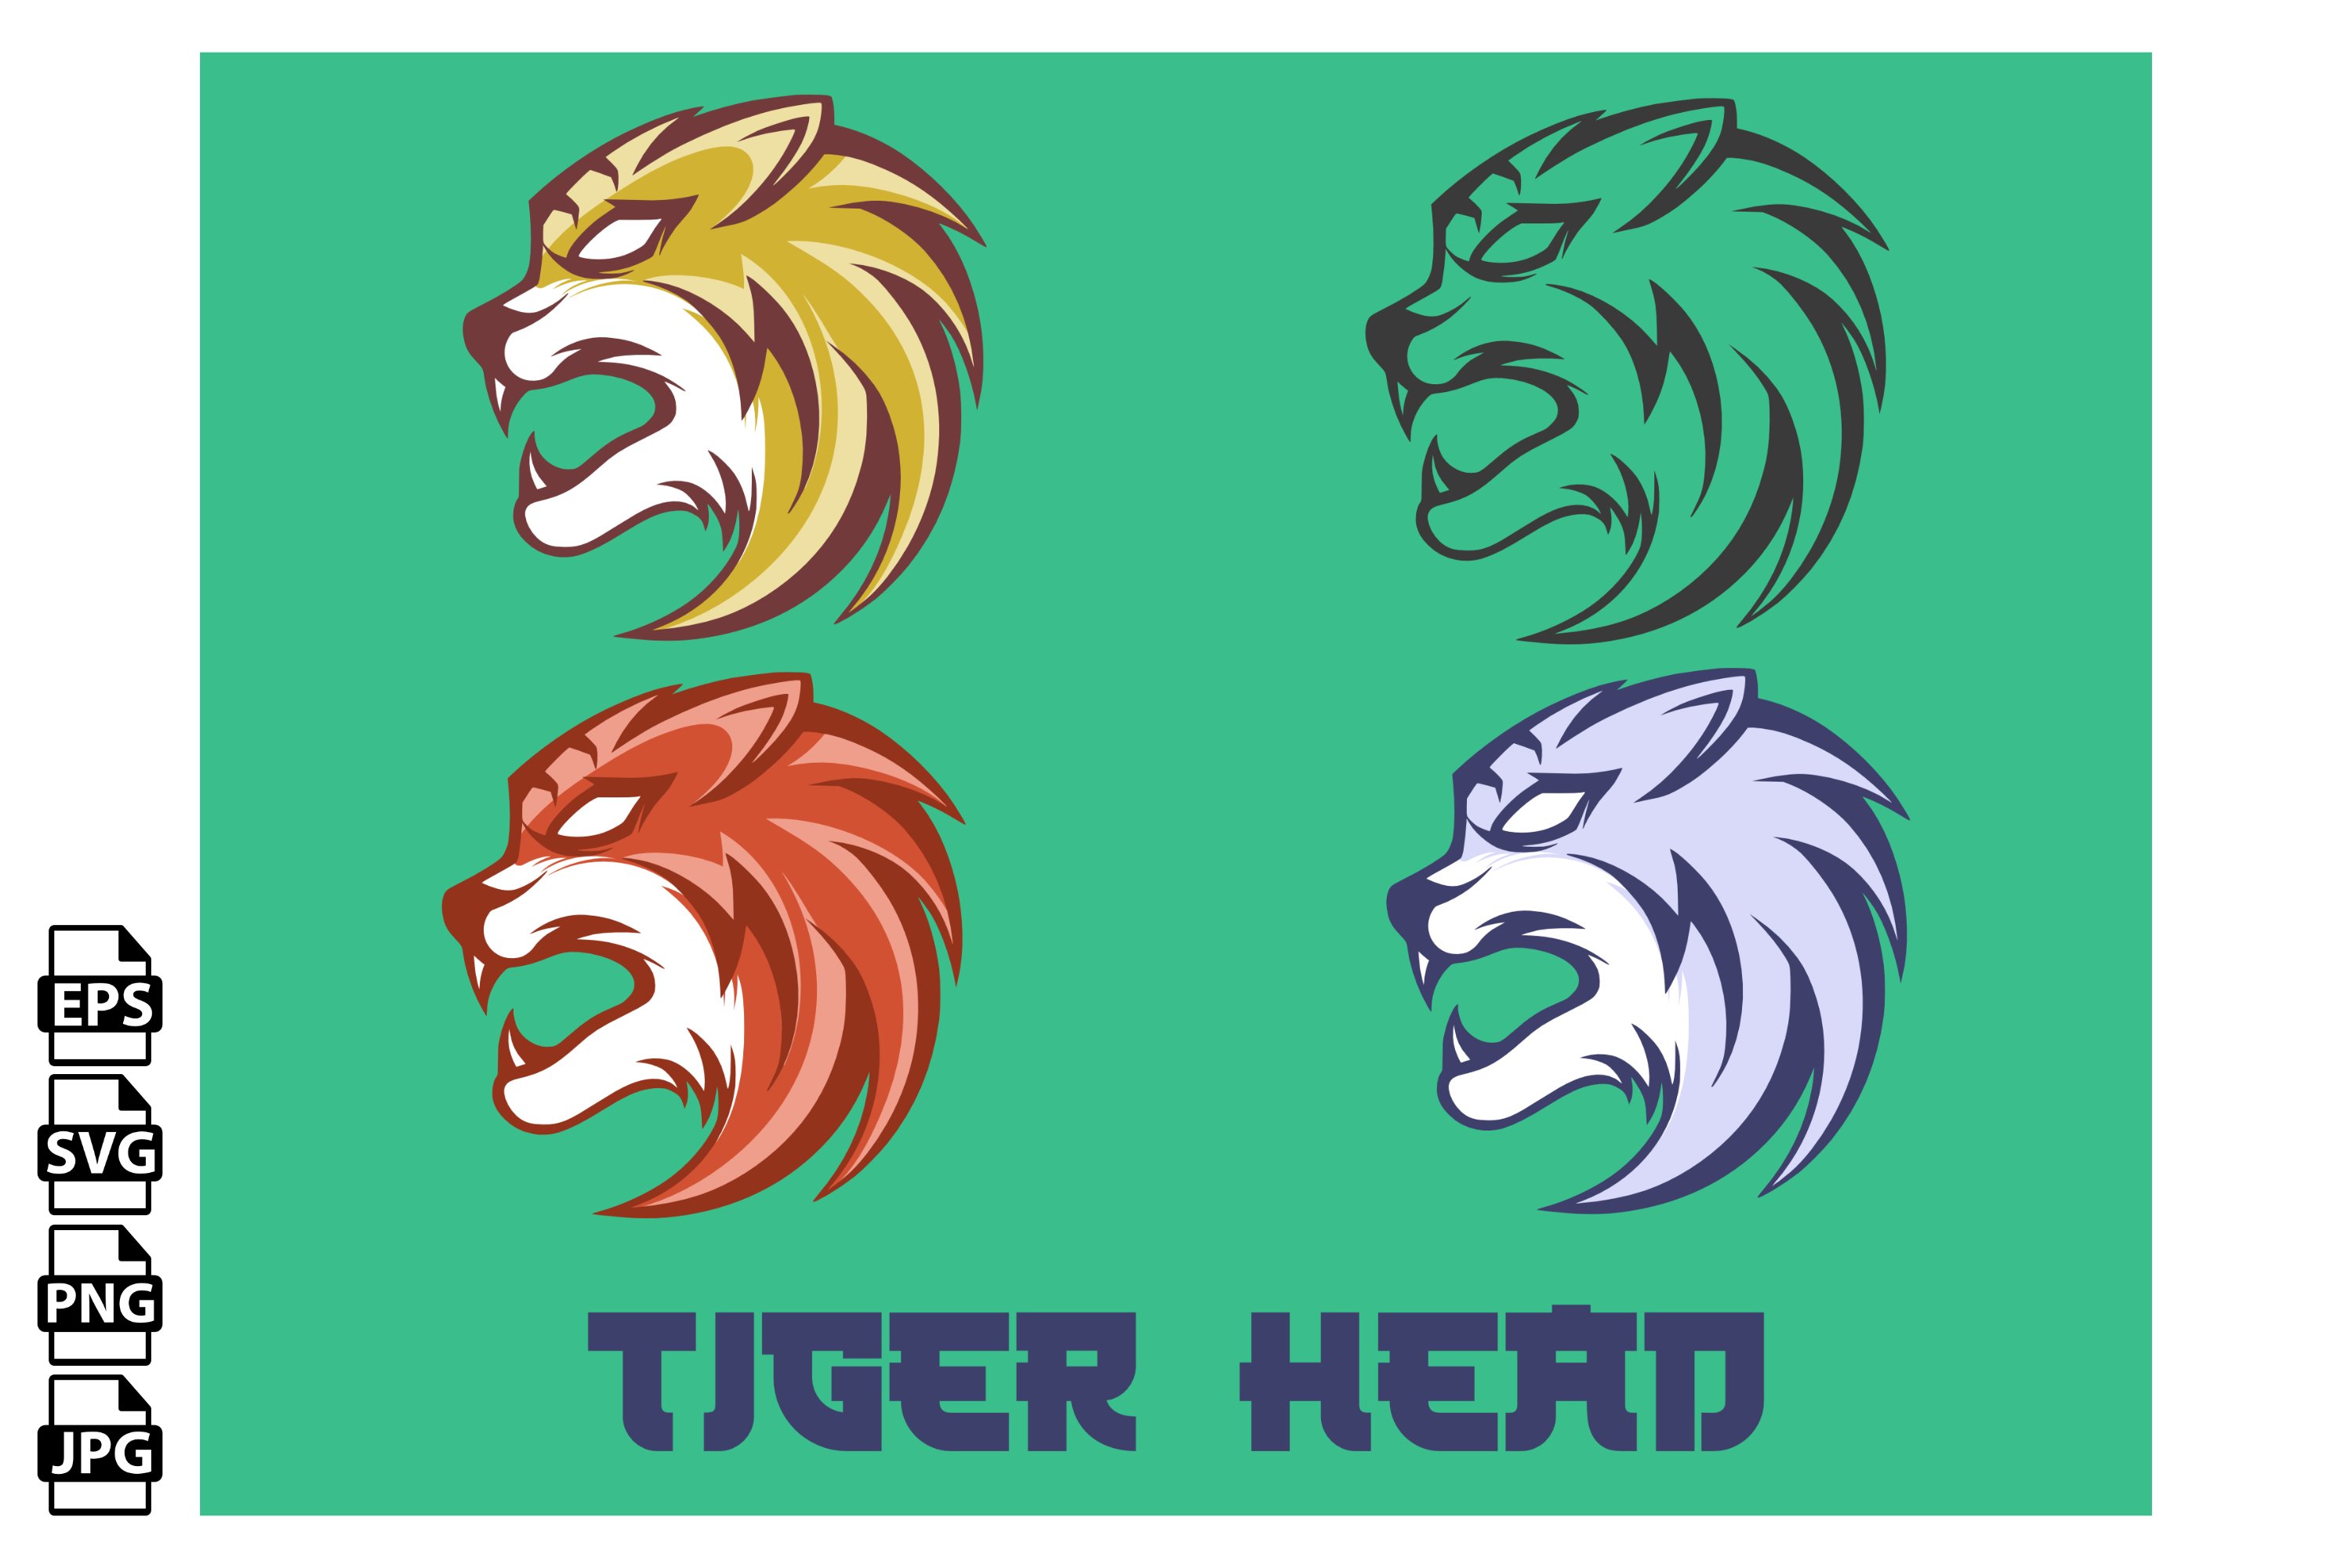 Tiger Head Icon. Stock Vector Illustration. Royalty Free SVG